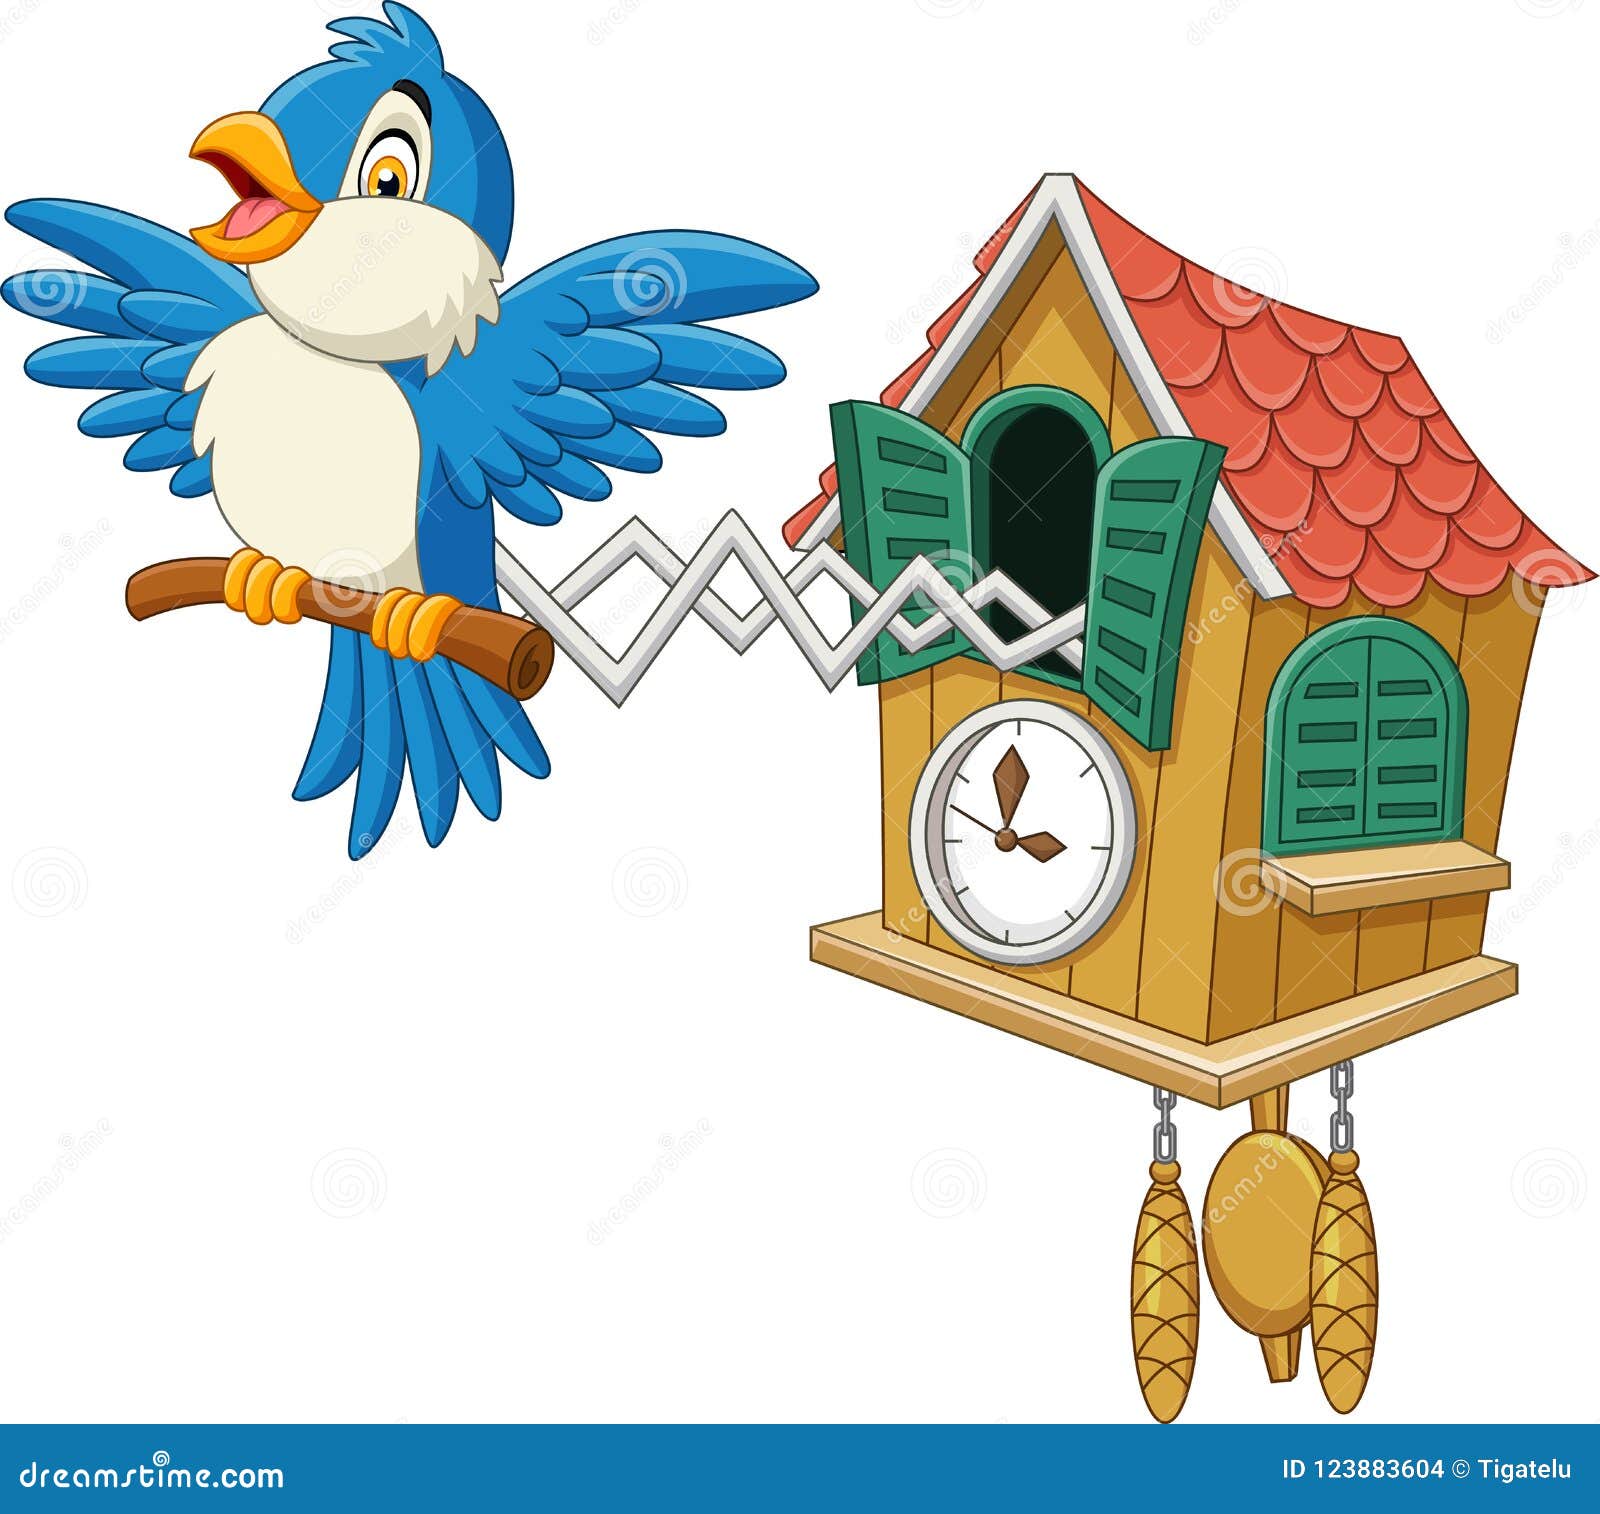 cuckoo clock with blue bird chirping